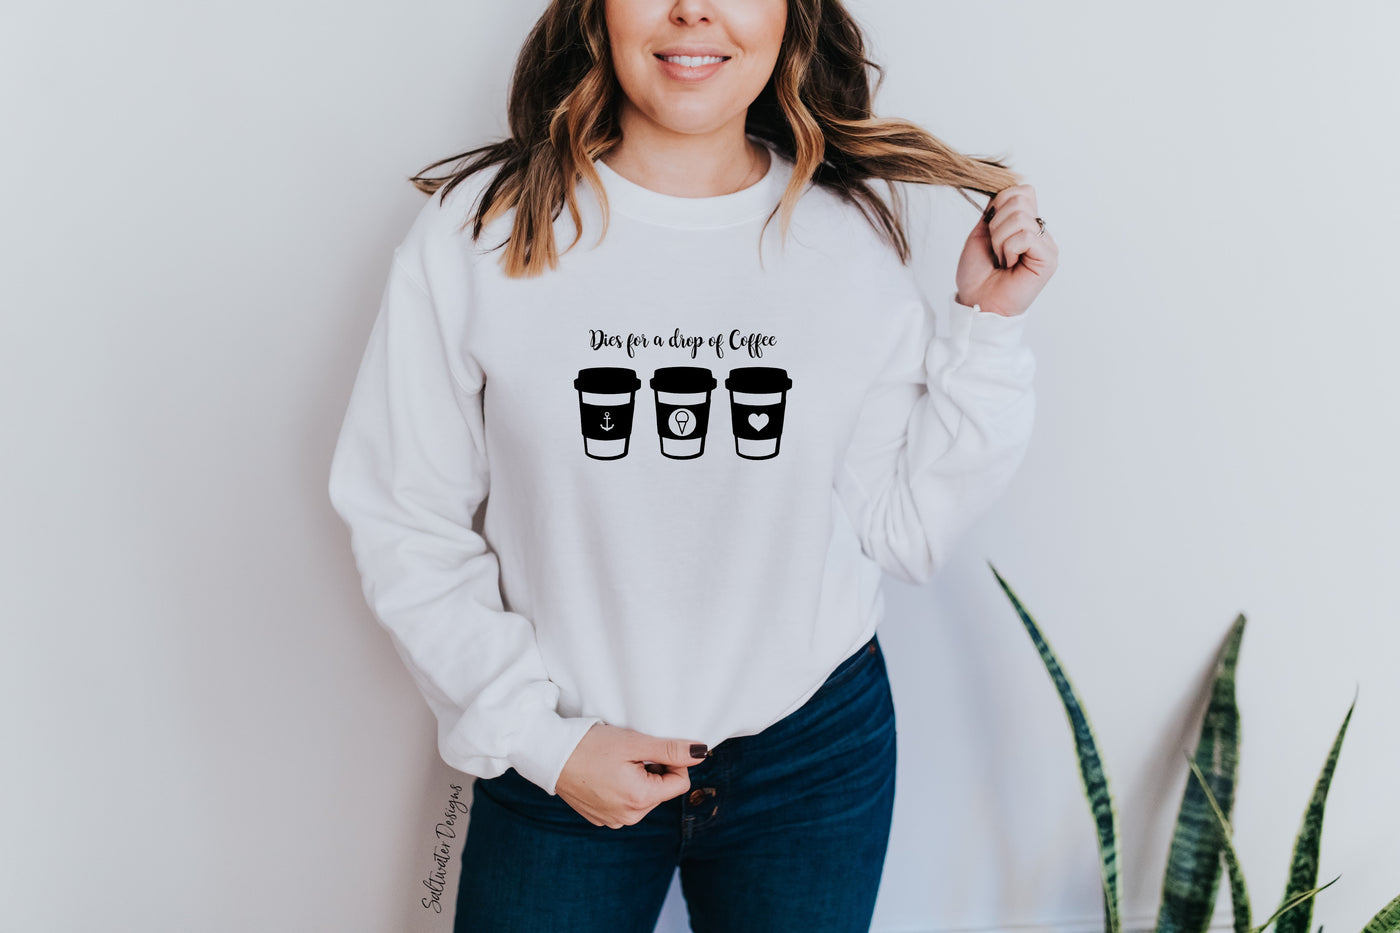 "Dies For a Drop of Coffee" Unisex Crewneck Sweatshirt